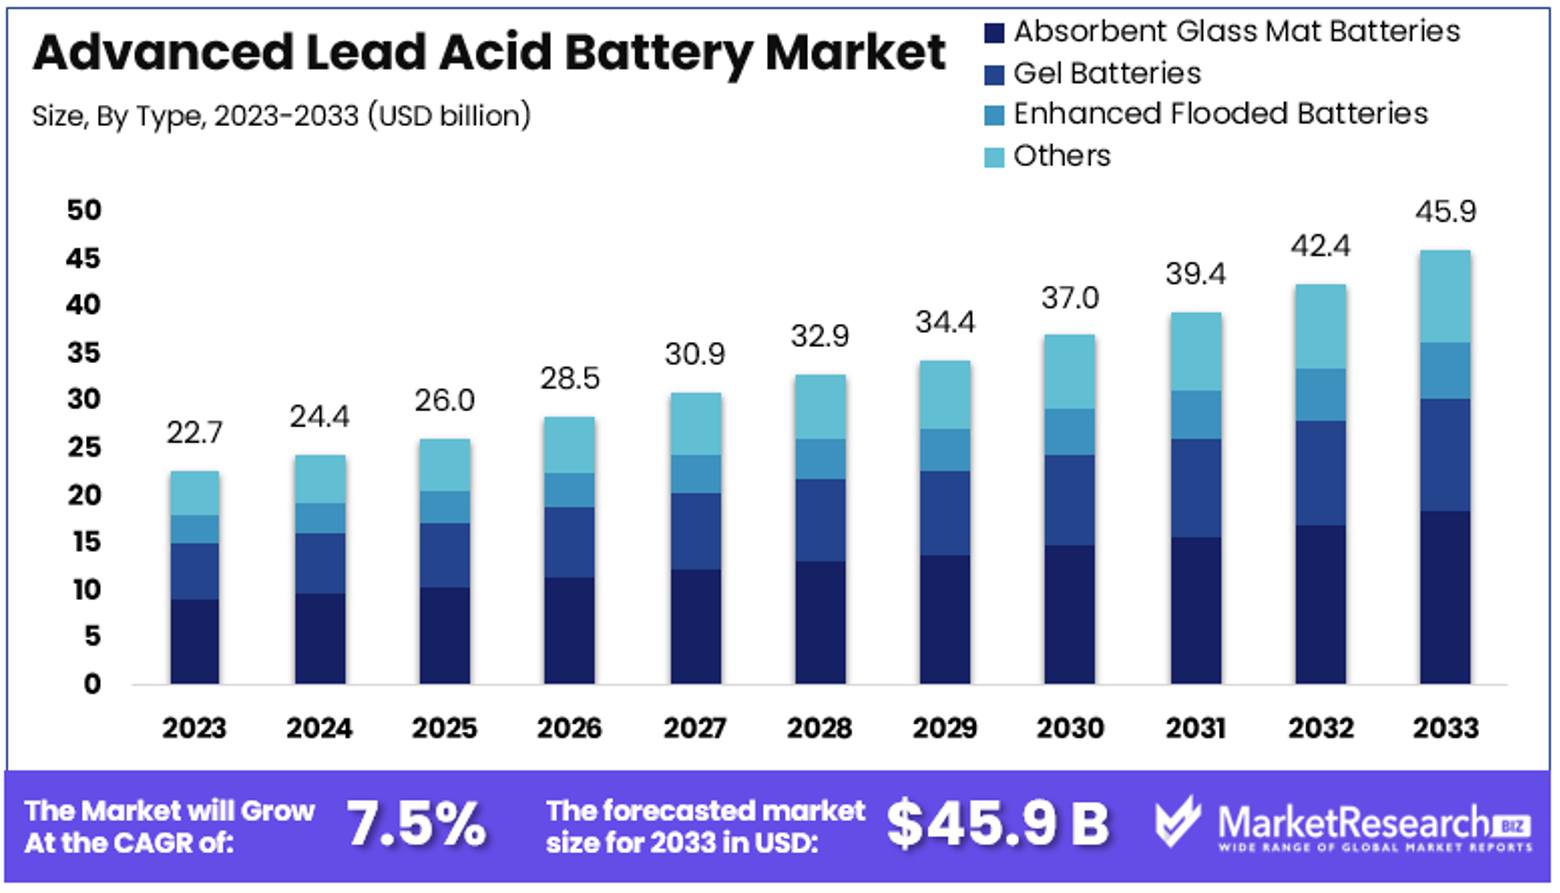 Advanced Lead Acid Battery Market By Size